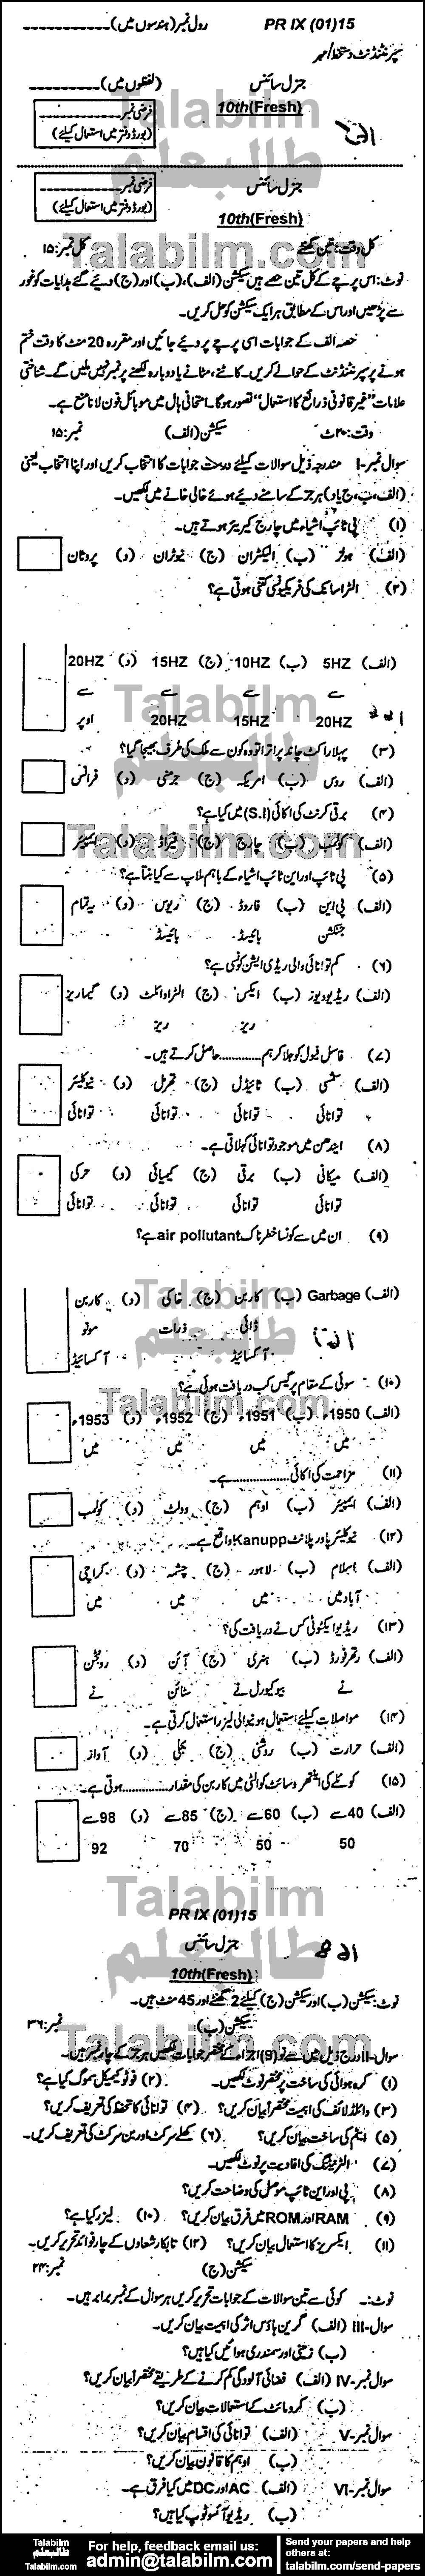 General Science 0 past paper for Urdu Medium 2015 Group-I